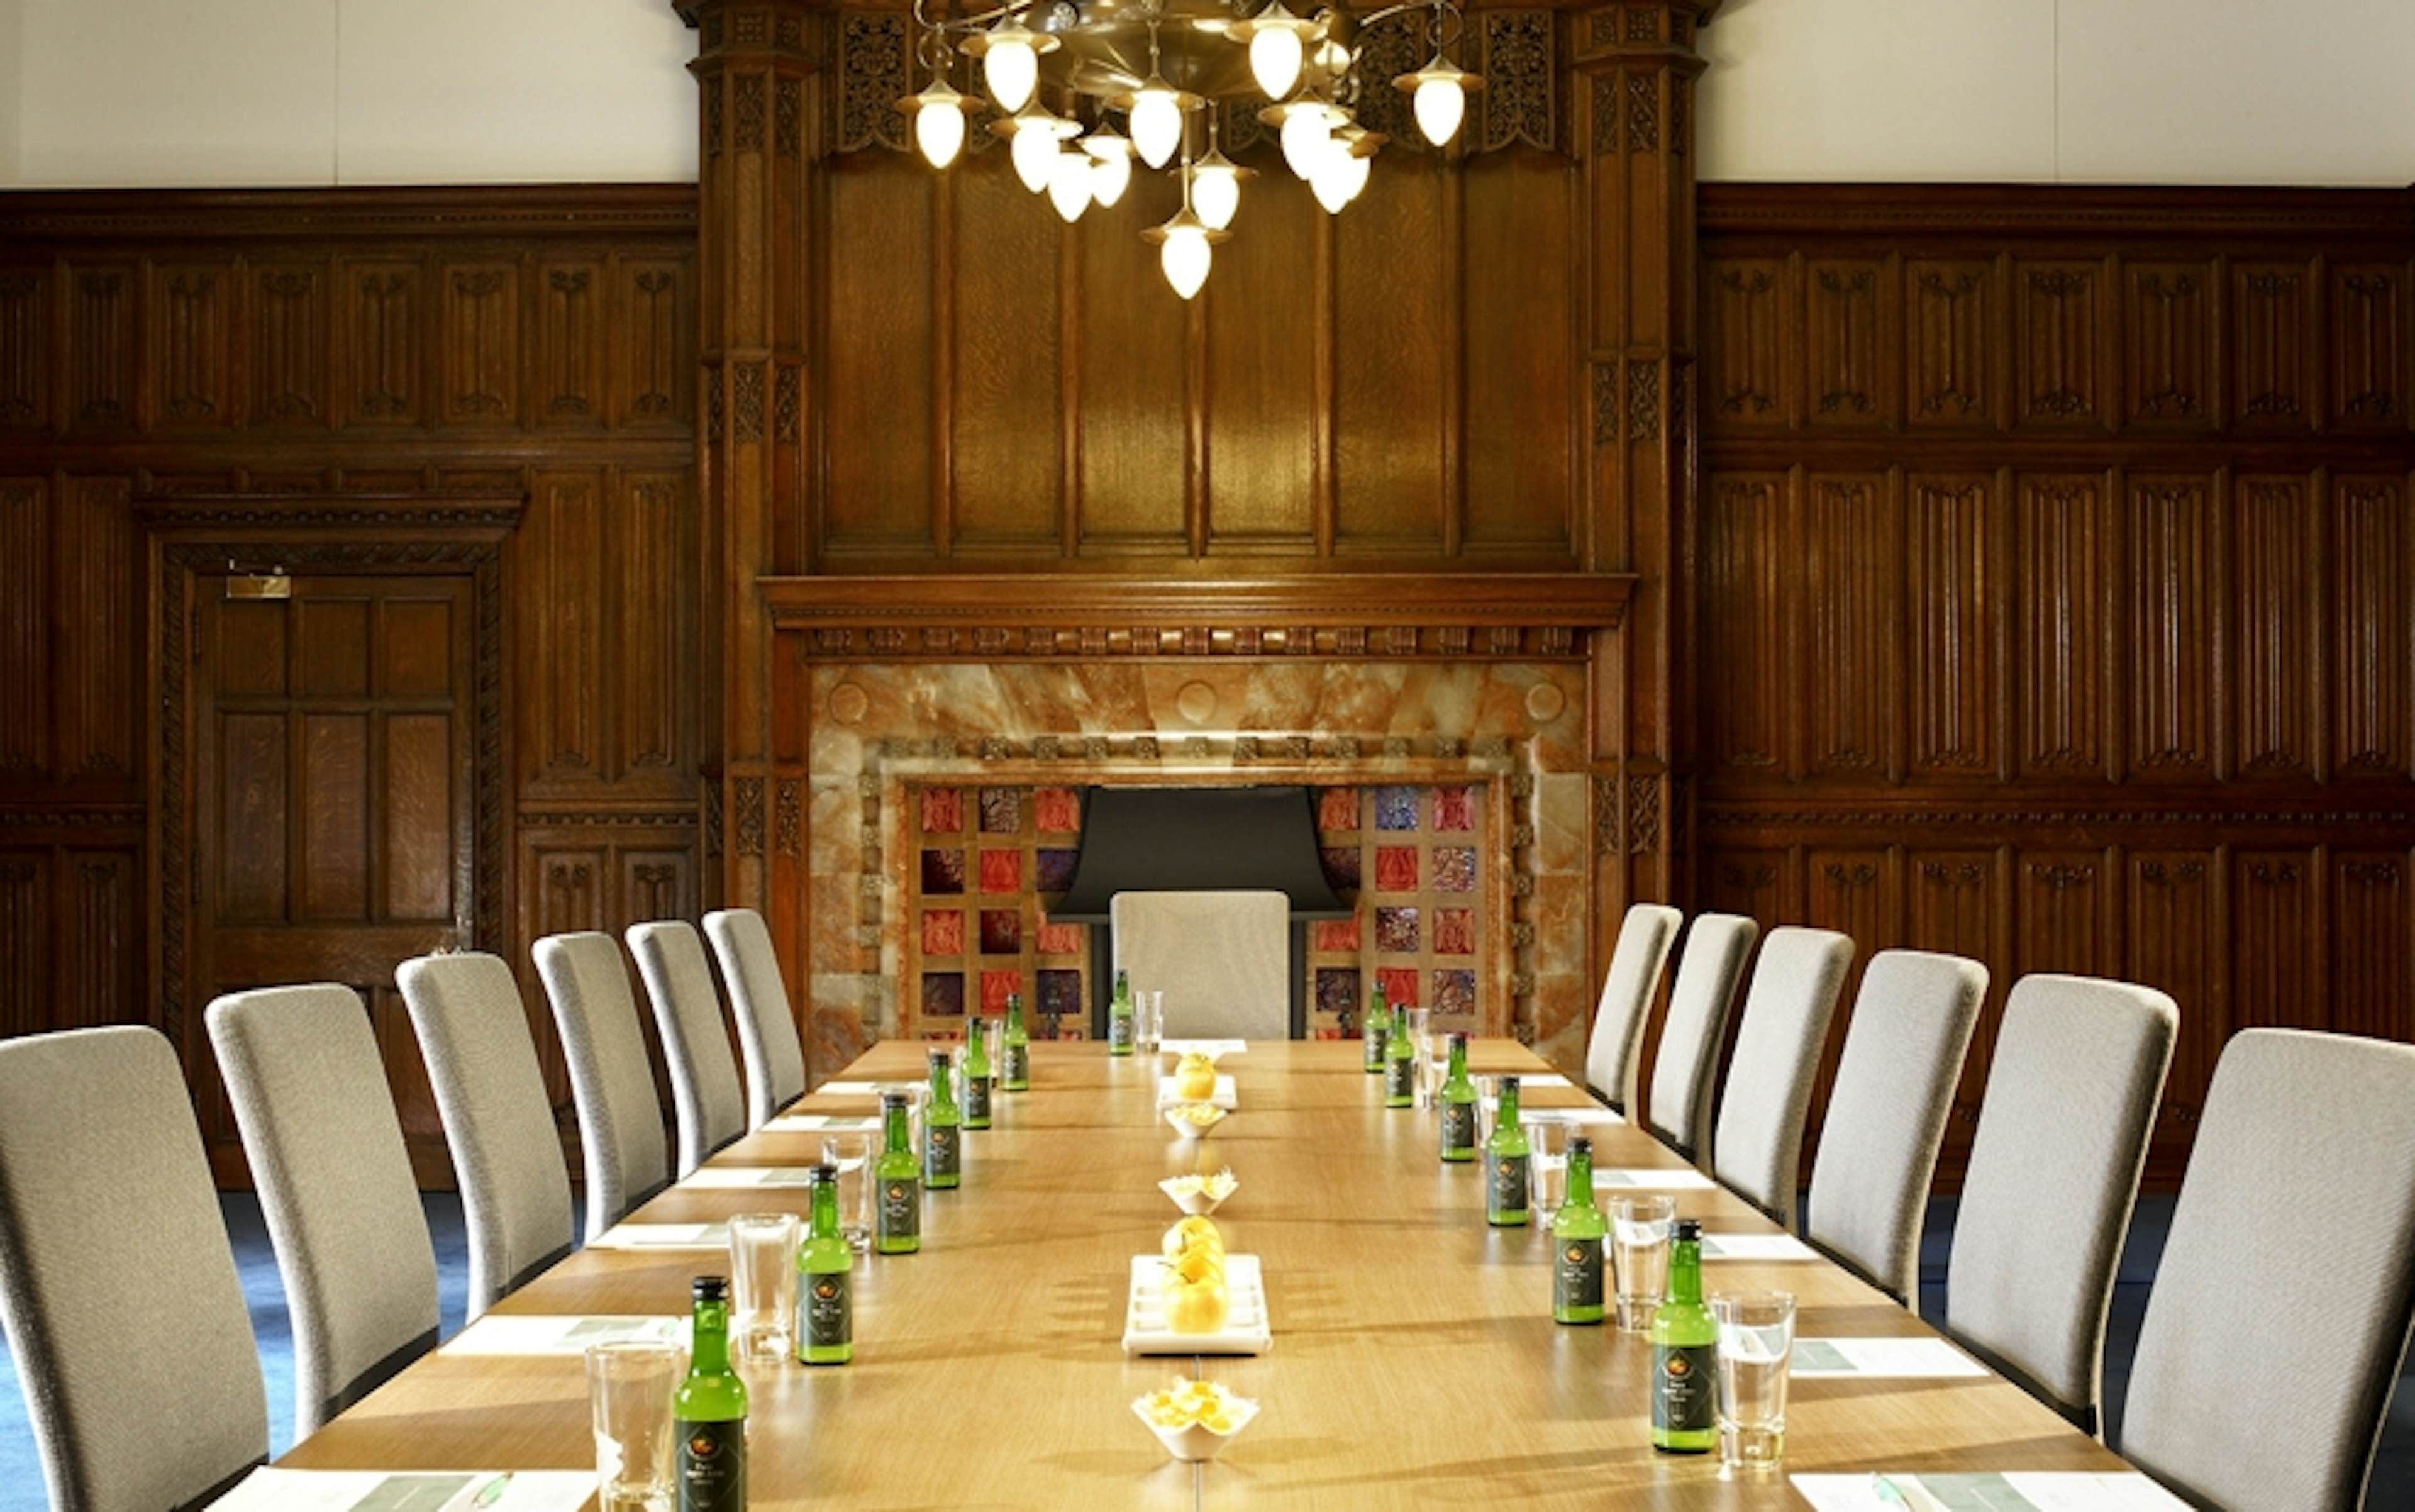 De Vere Holborn Bars - Large Meeting Room image 1